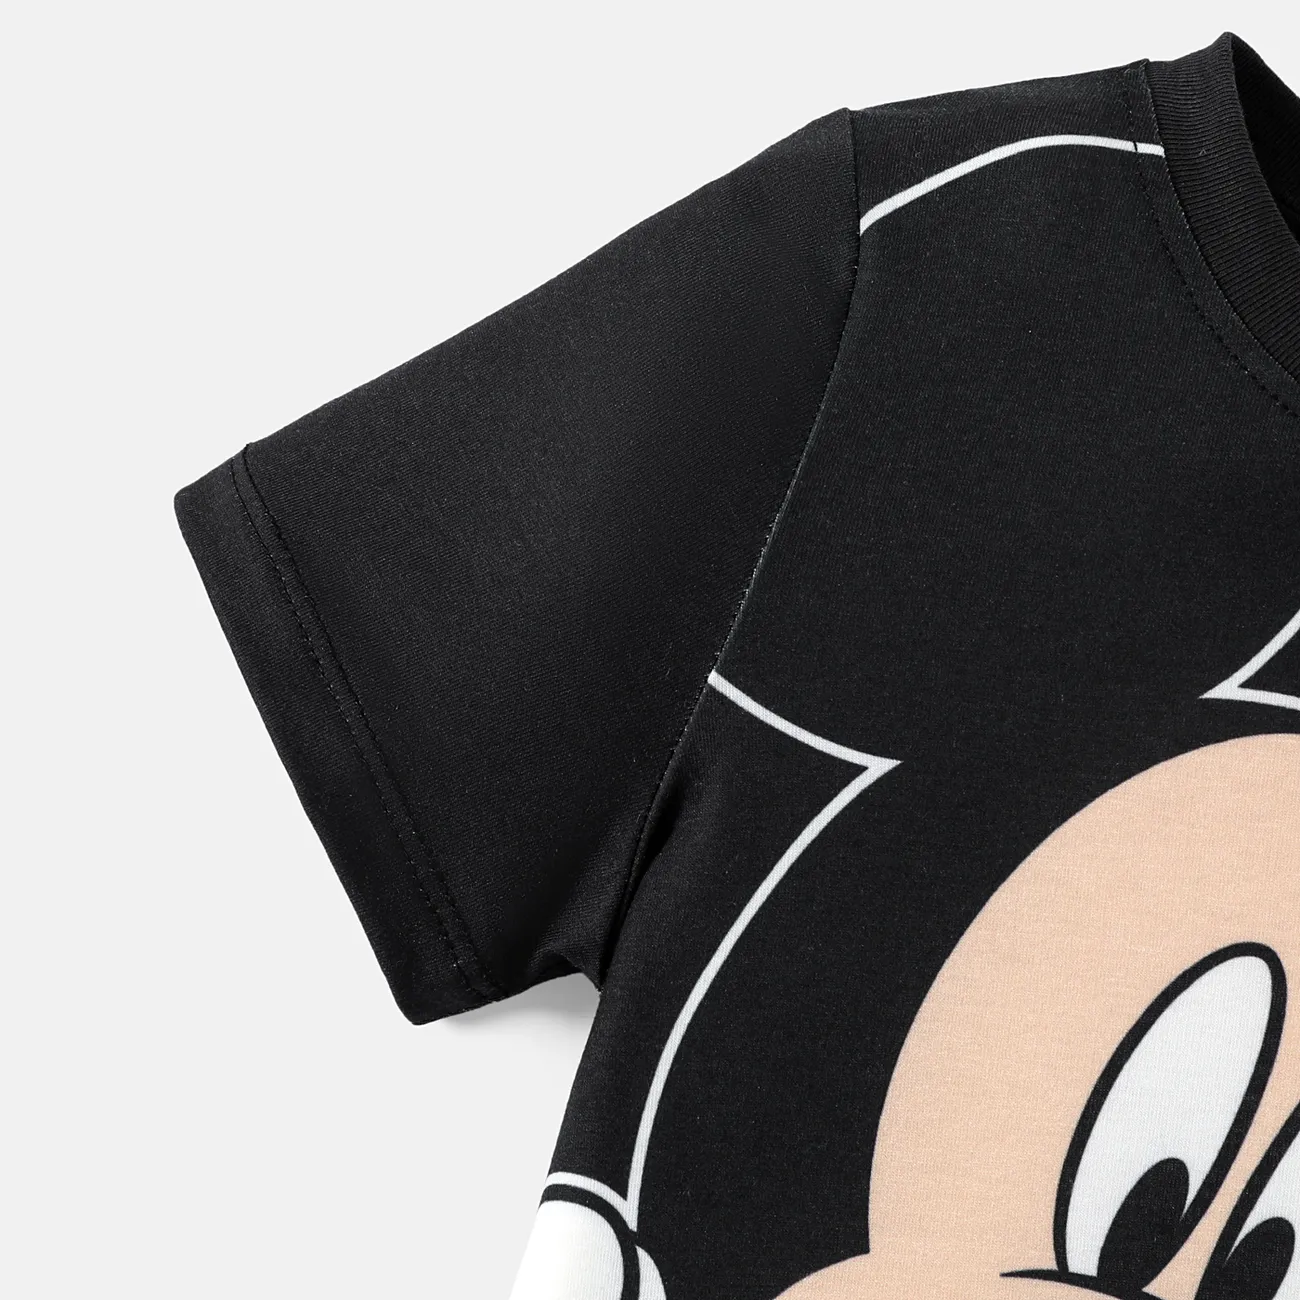 Disney Mickey and Friends Toddler/Kid Girl/Boy Character & Letter Print Naia™ Short-sleeve Tee Black big image 1